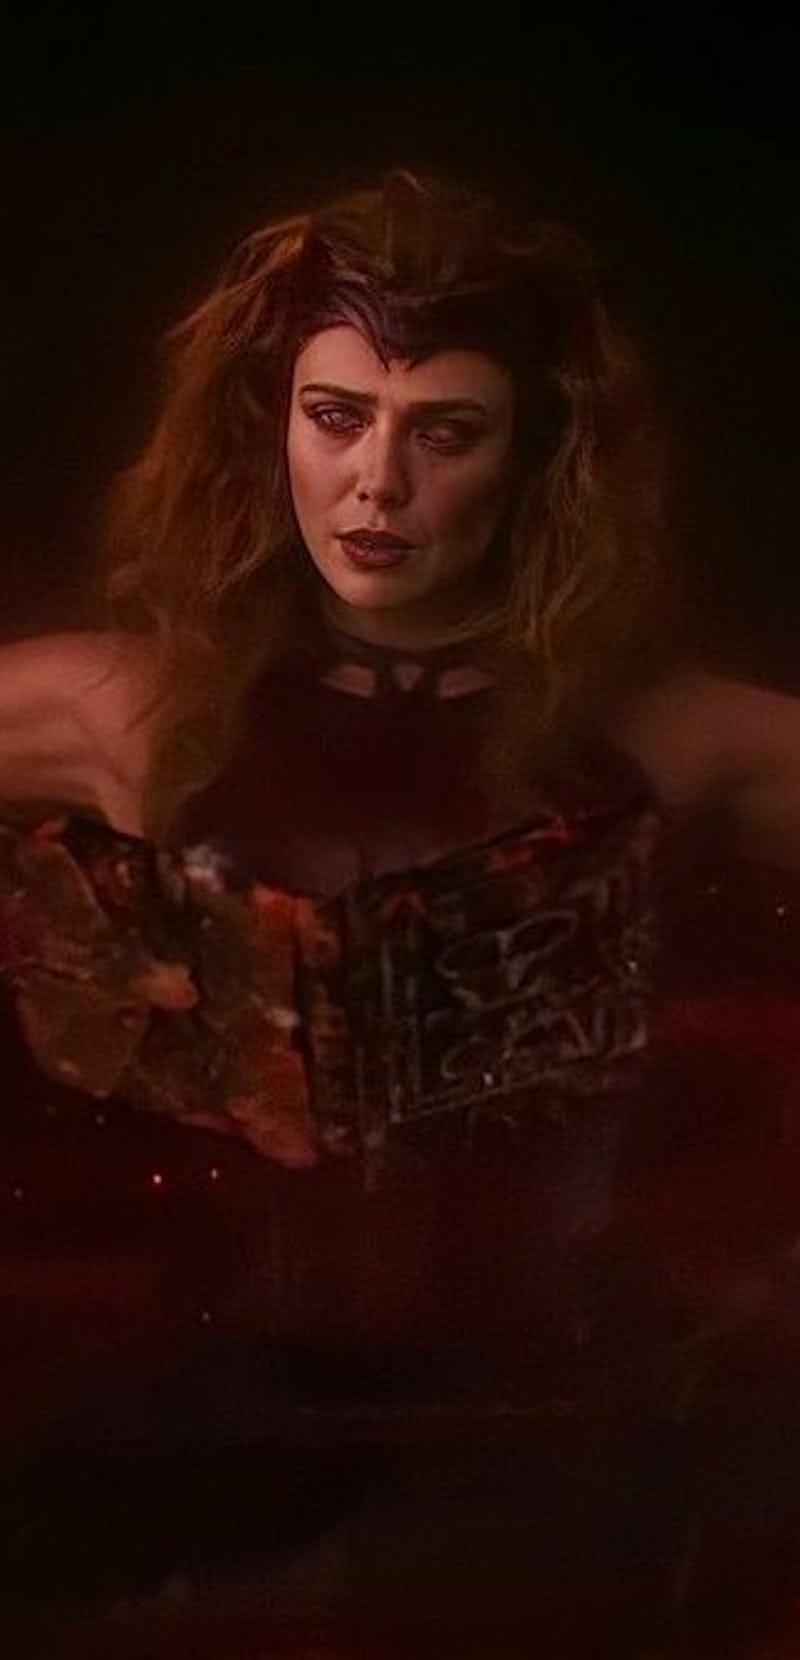 Elizabeth Olsen as Wanda during a fight in the MCU